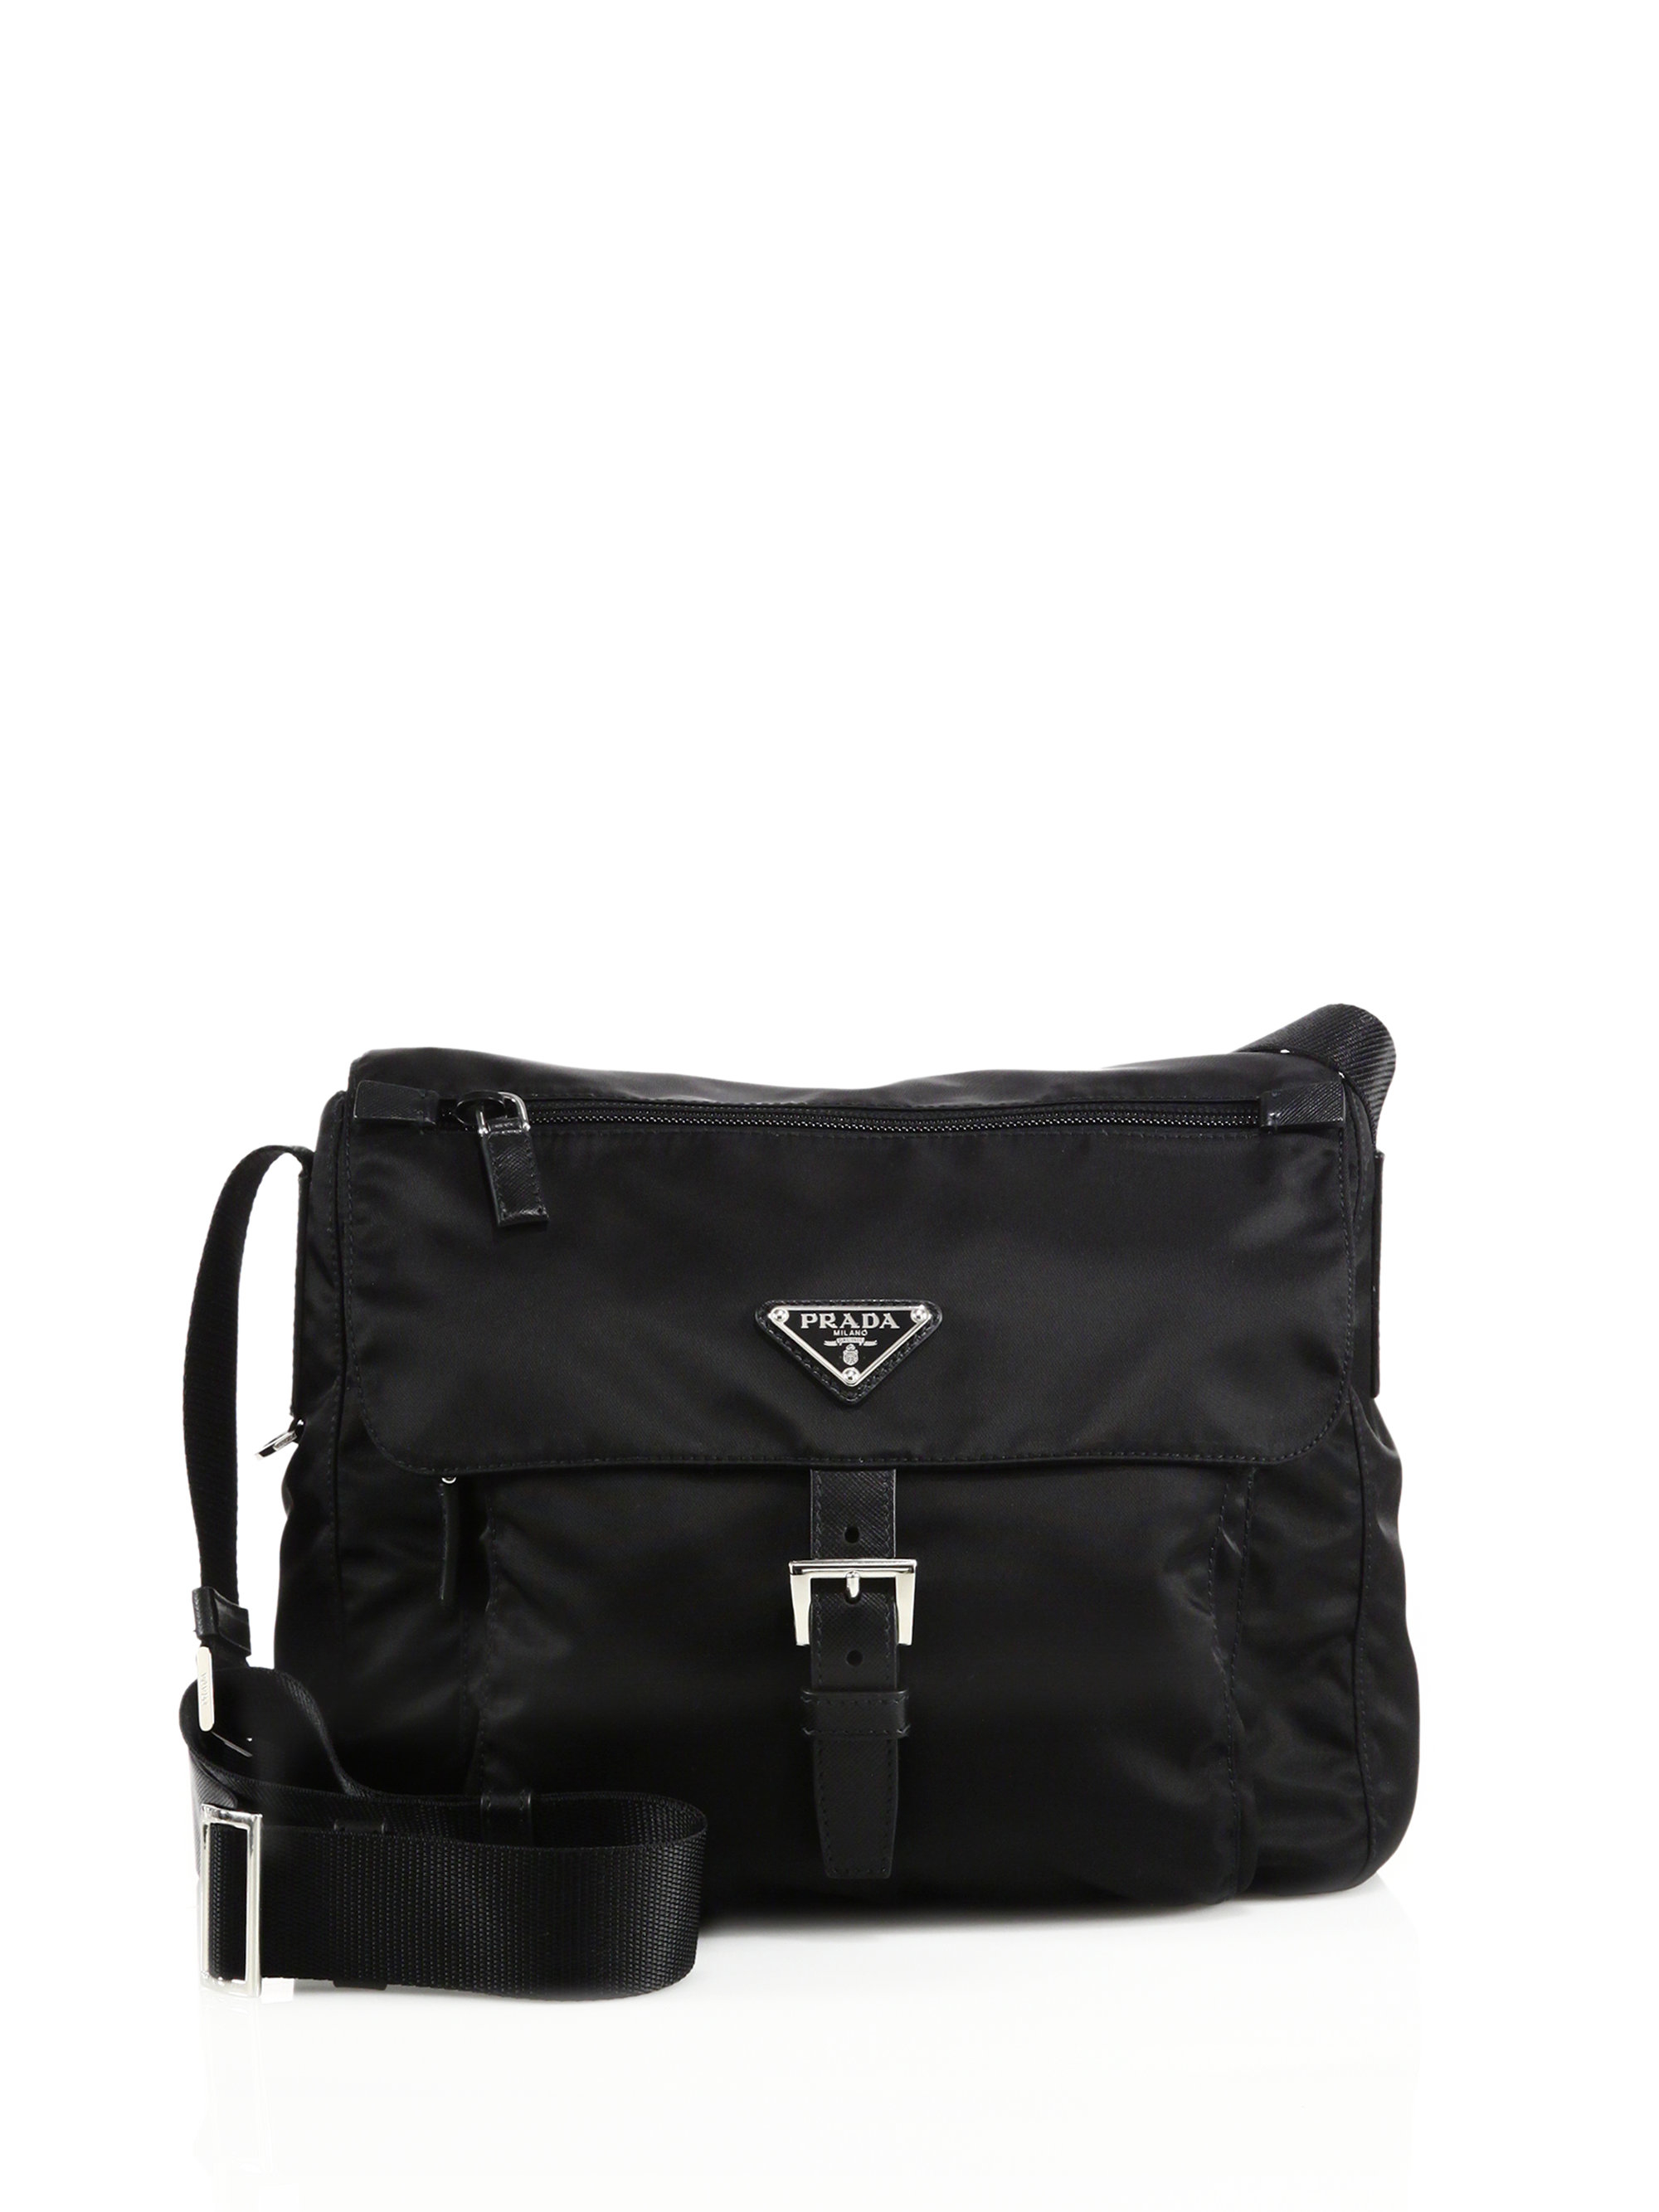 Prada Black Nylon Handbag | semashow.com